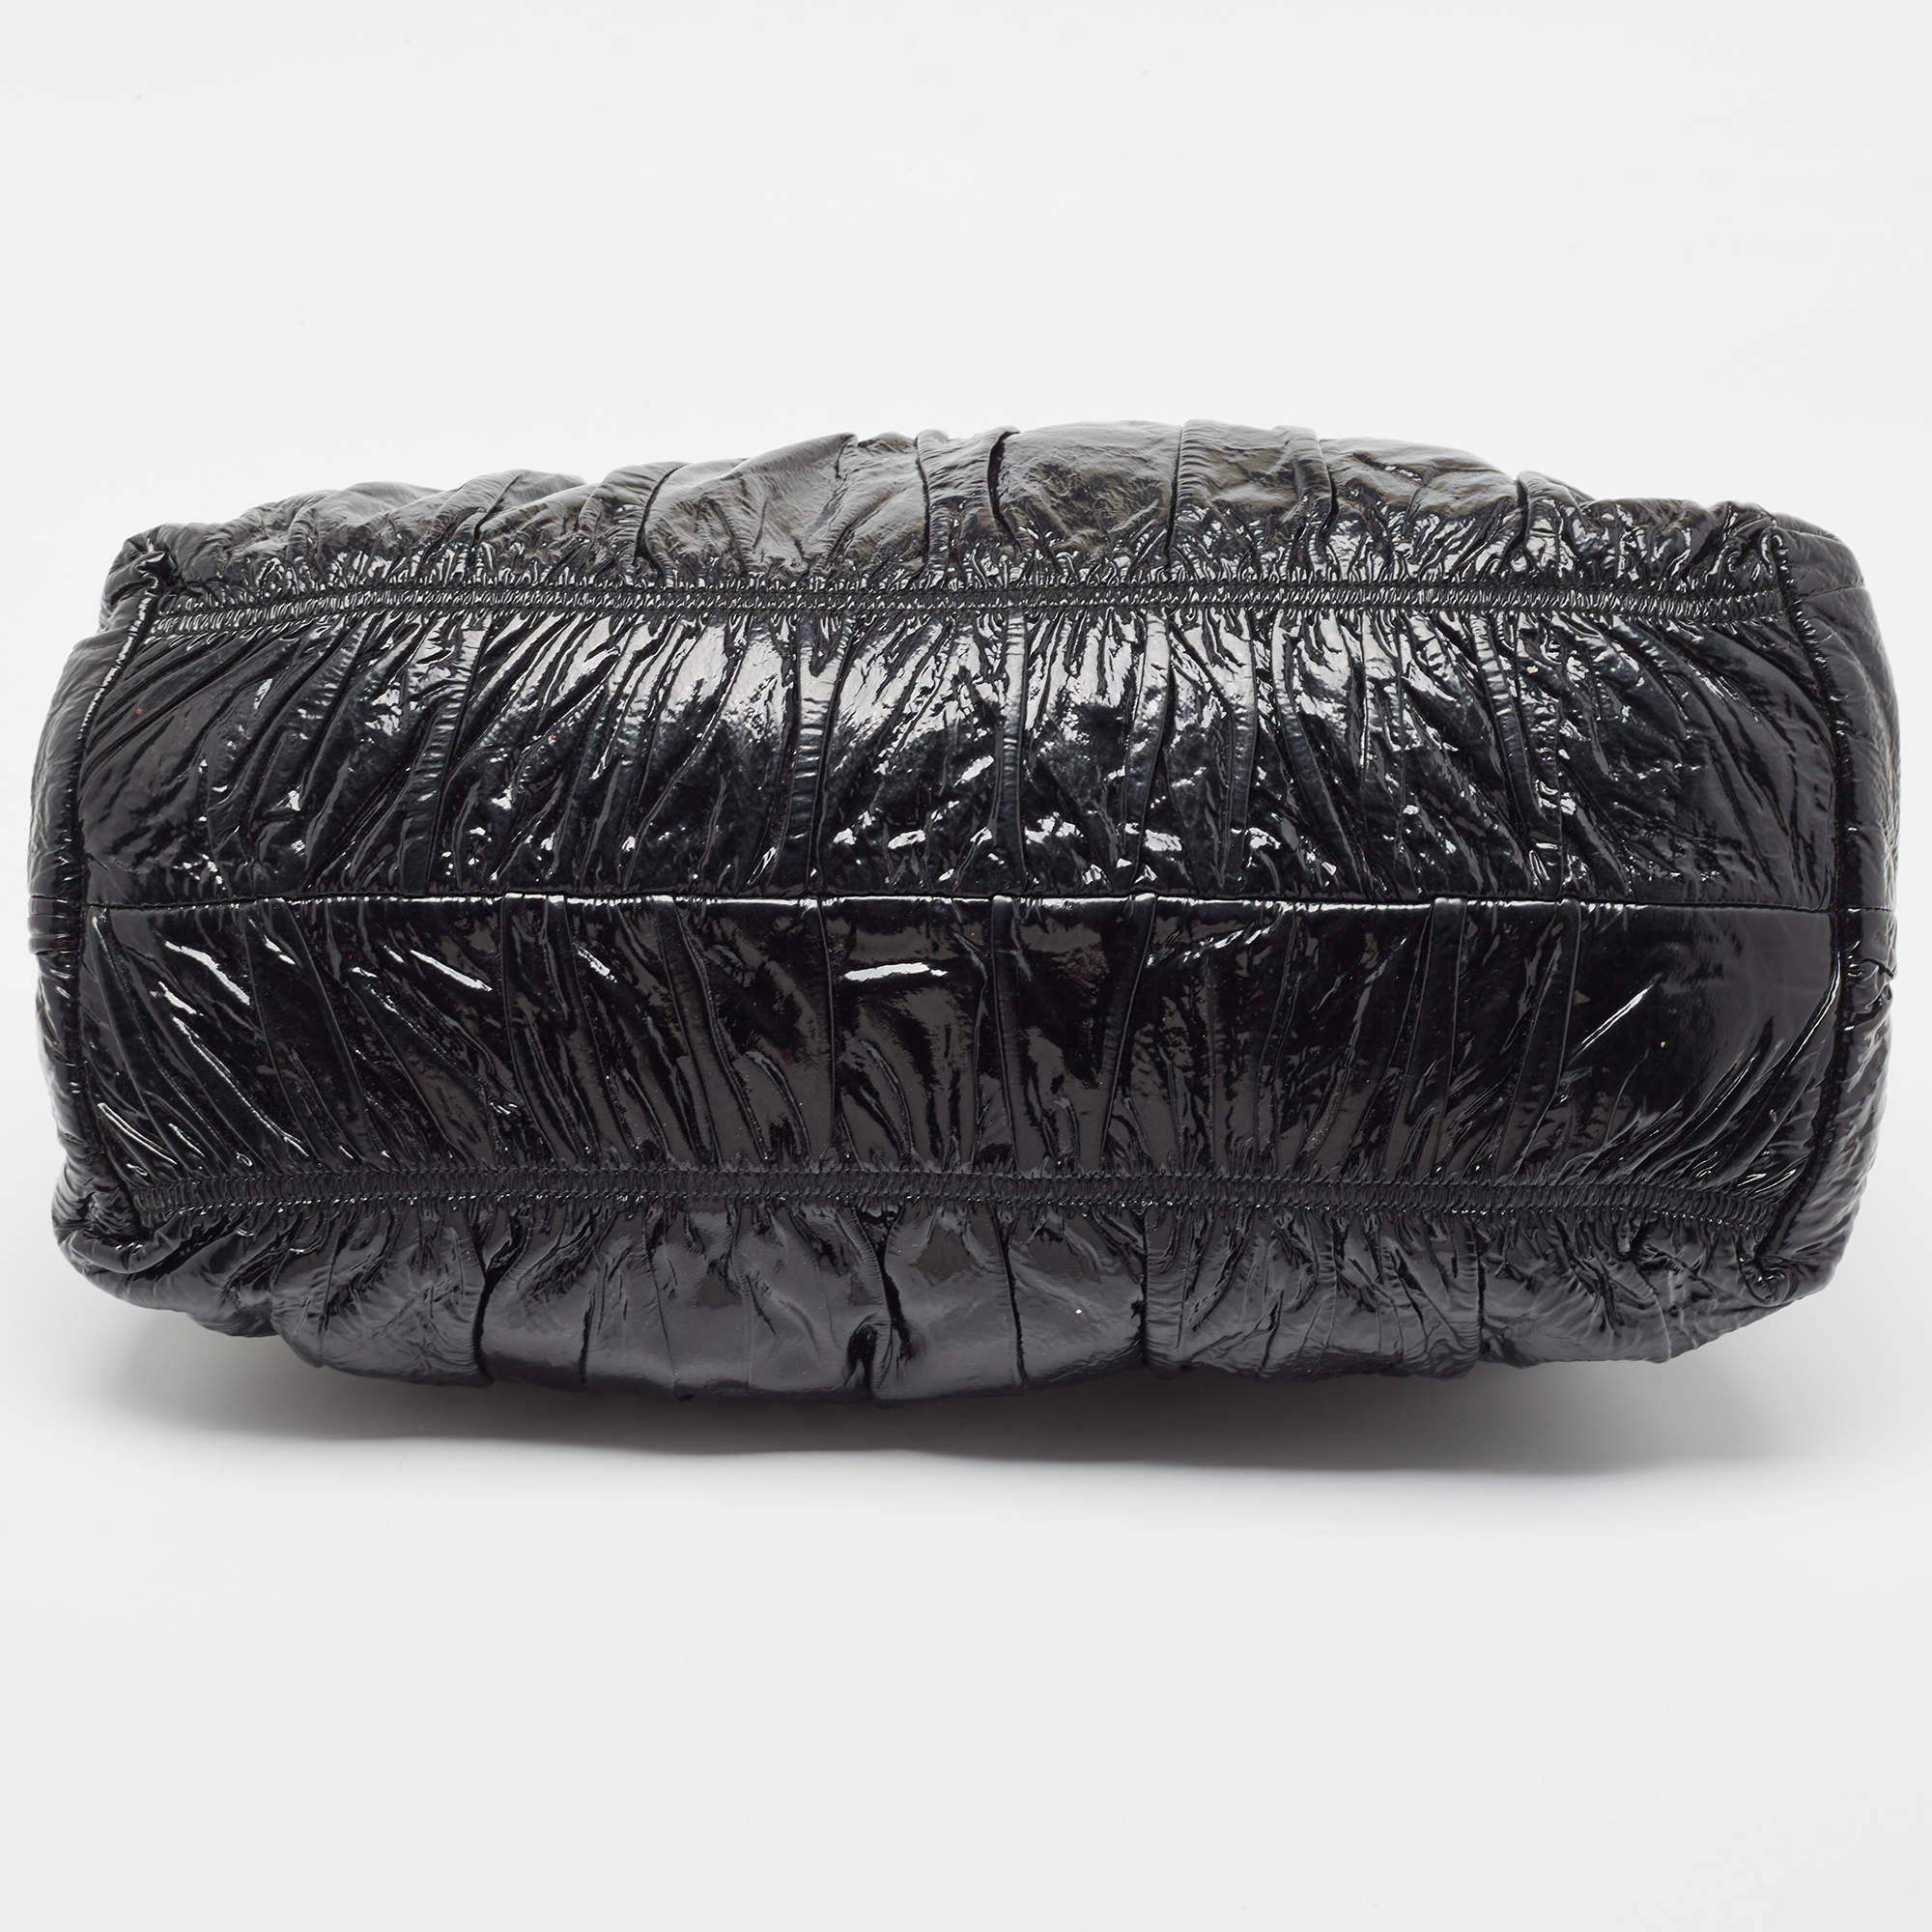 Prada Black Gaufre Patent Leather Large Tote 1